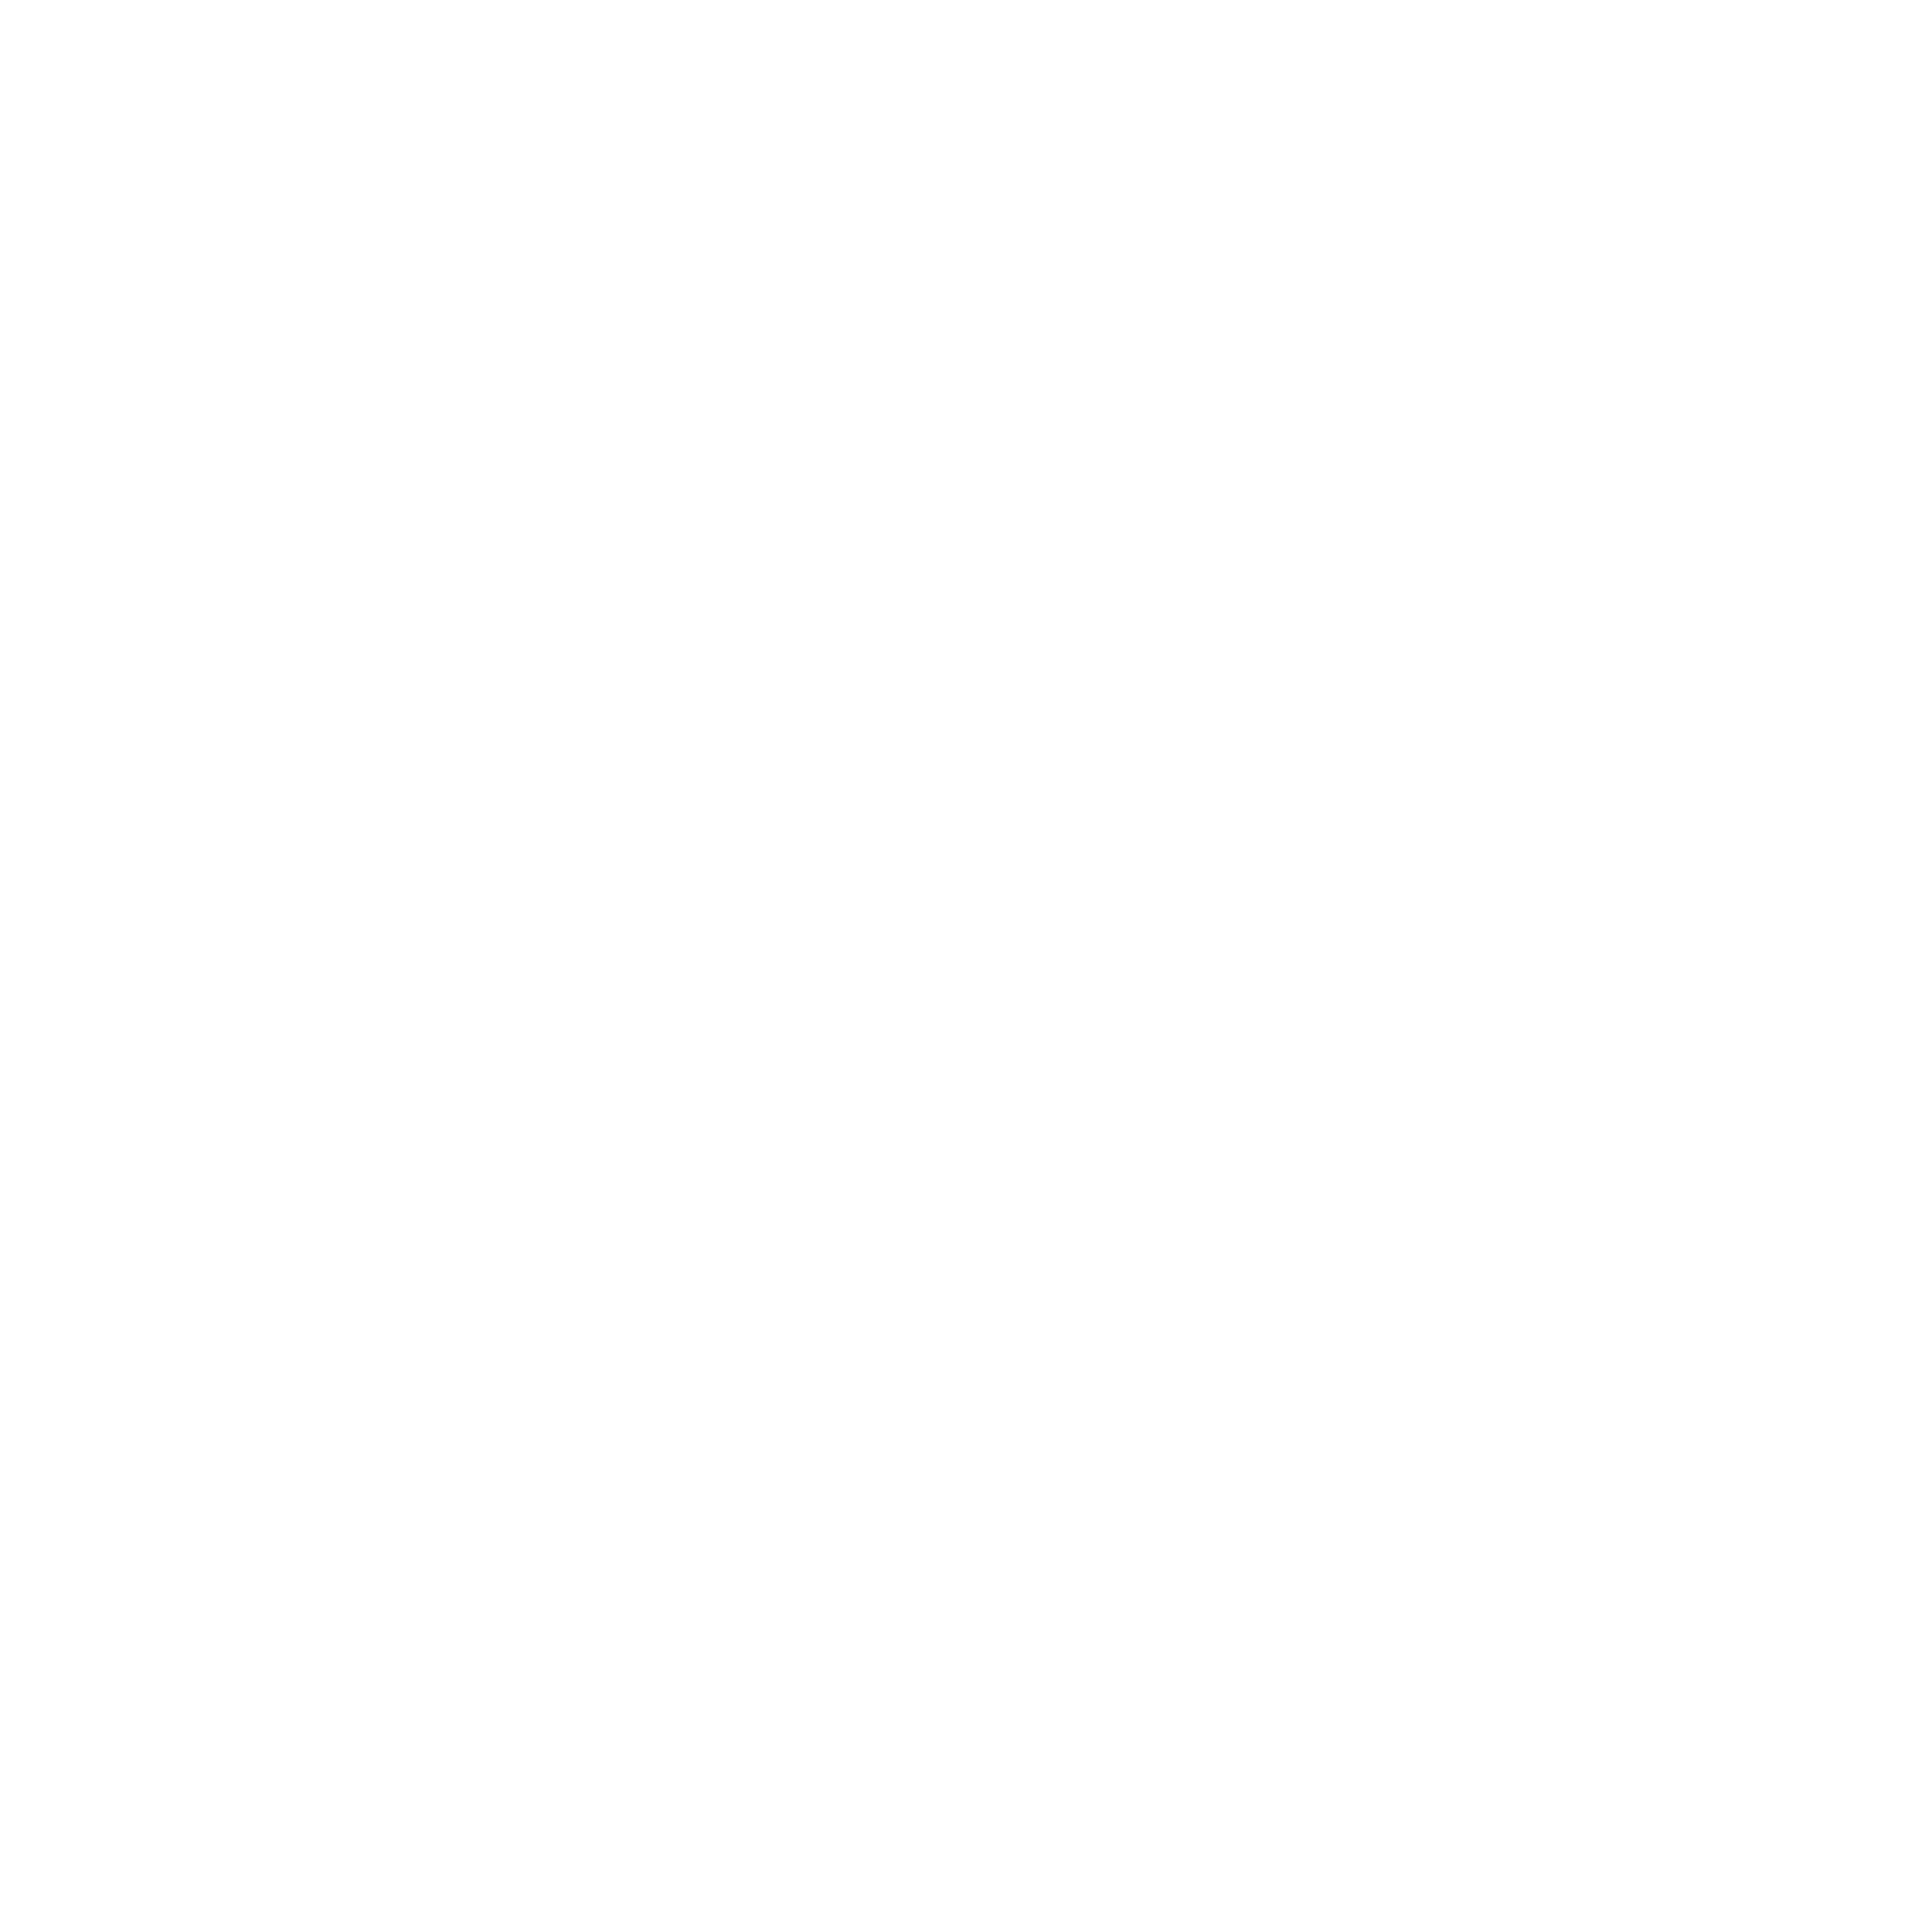 Smile Train Logo - The Smile Train Logo PNG Transparent & SVG Vector - Freebie Supply